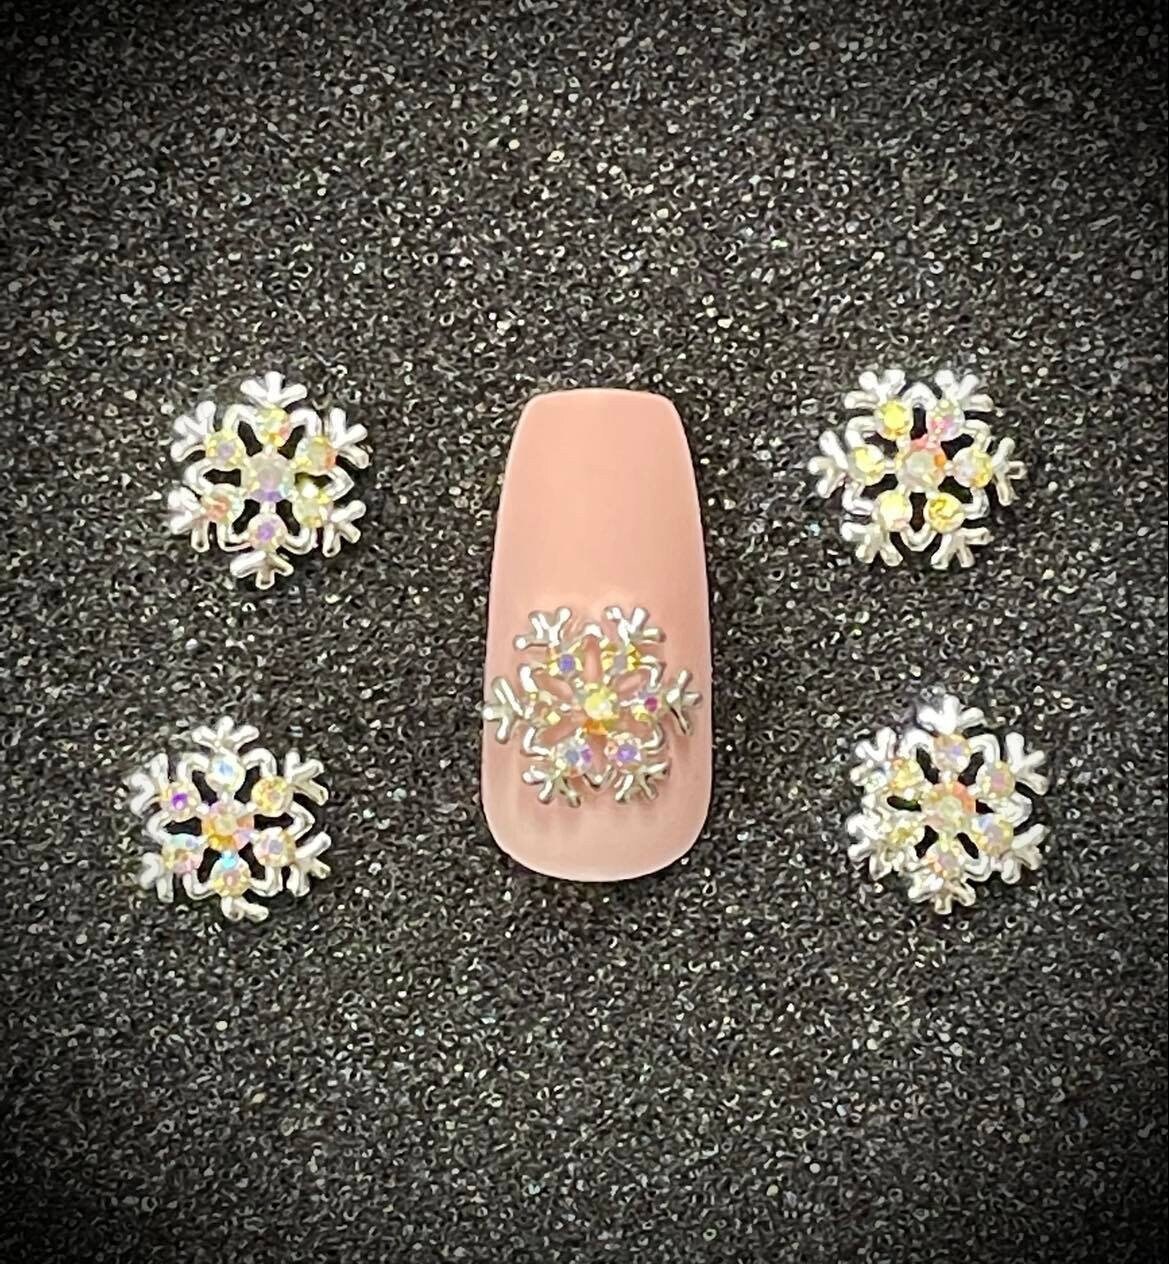 500pcs Multi-Size AB Rhinestones/ Pink Flat Back Crystal Gems 3d Nail Art  Decal